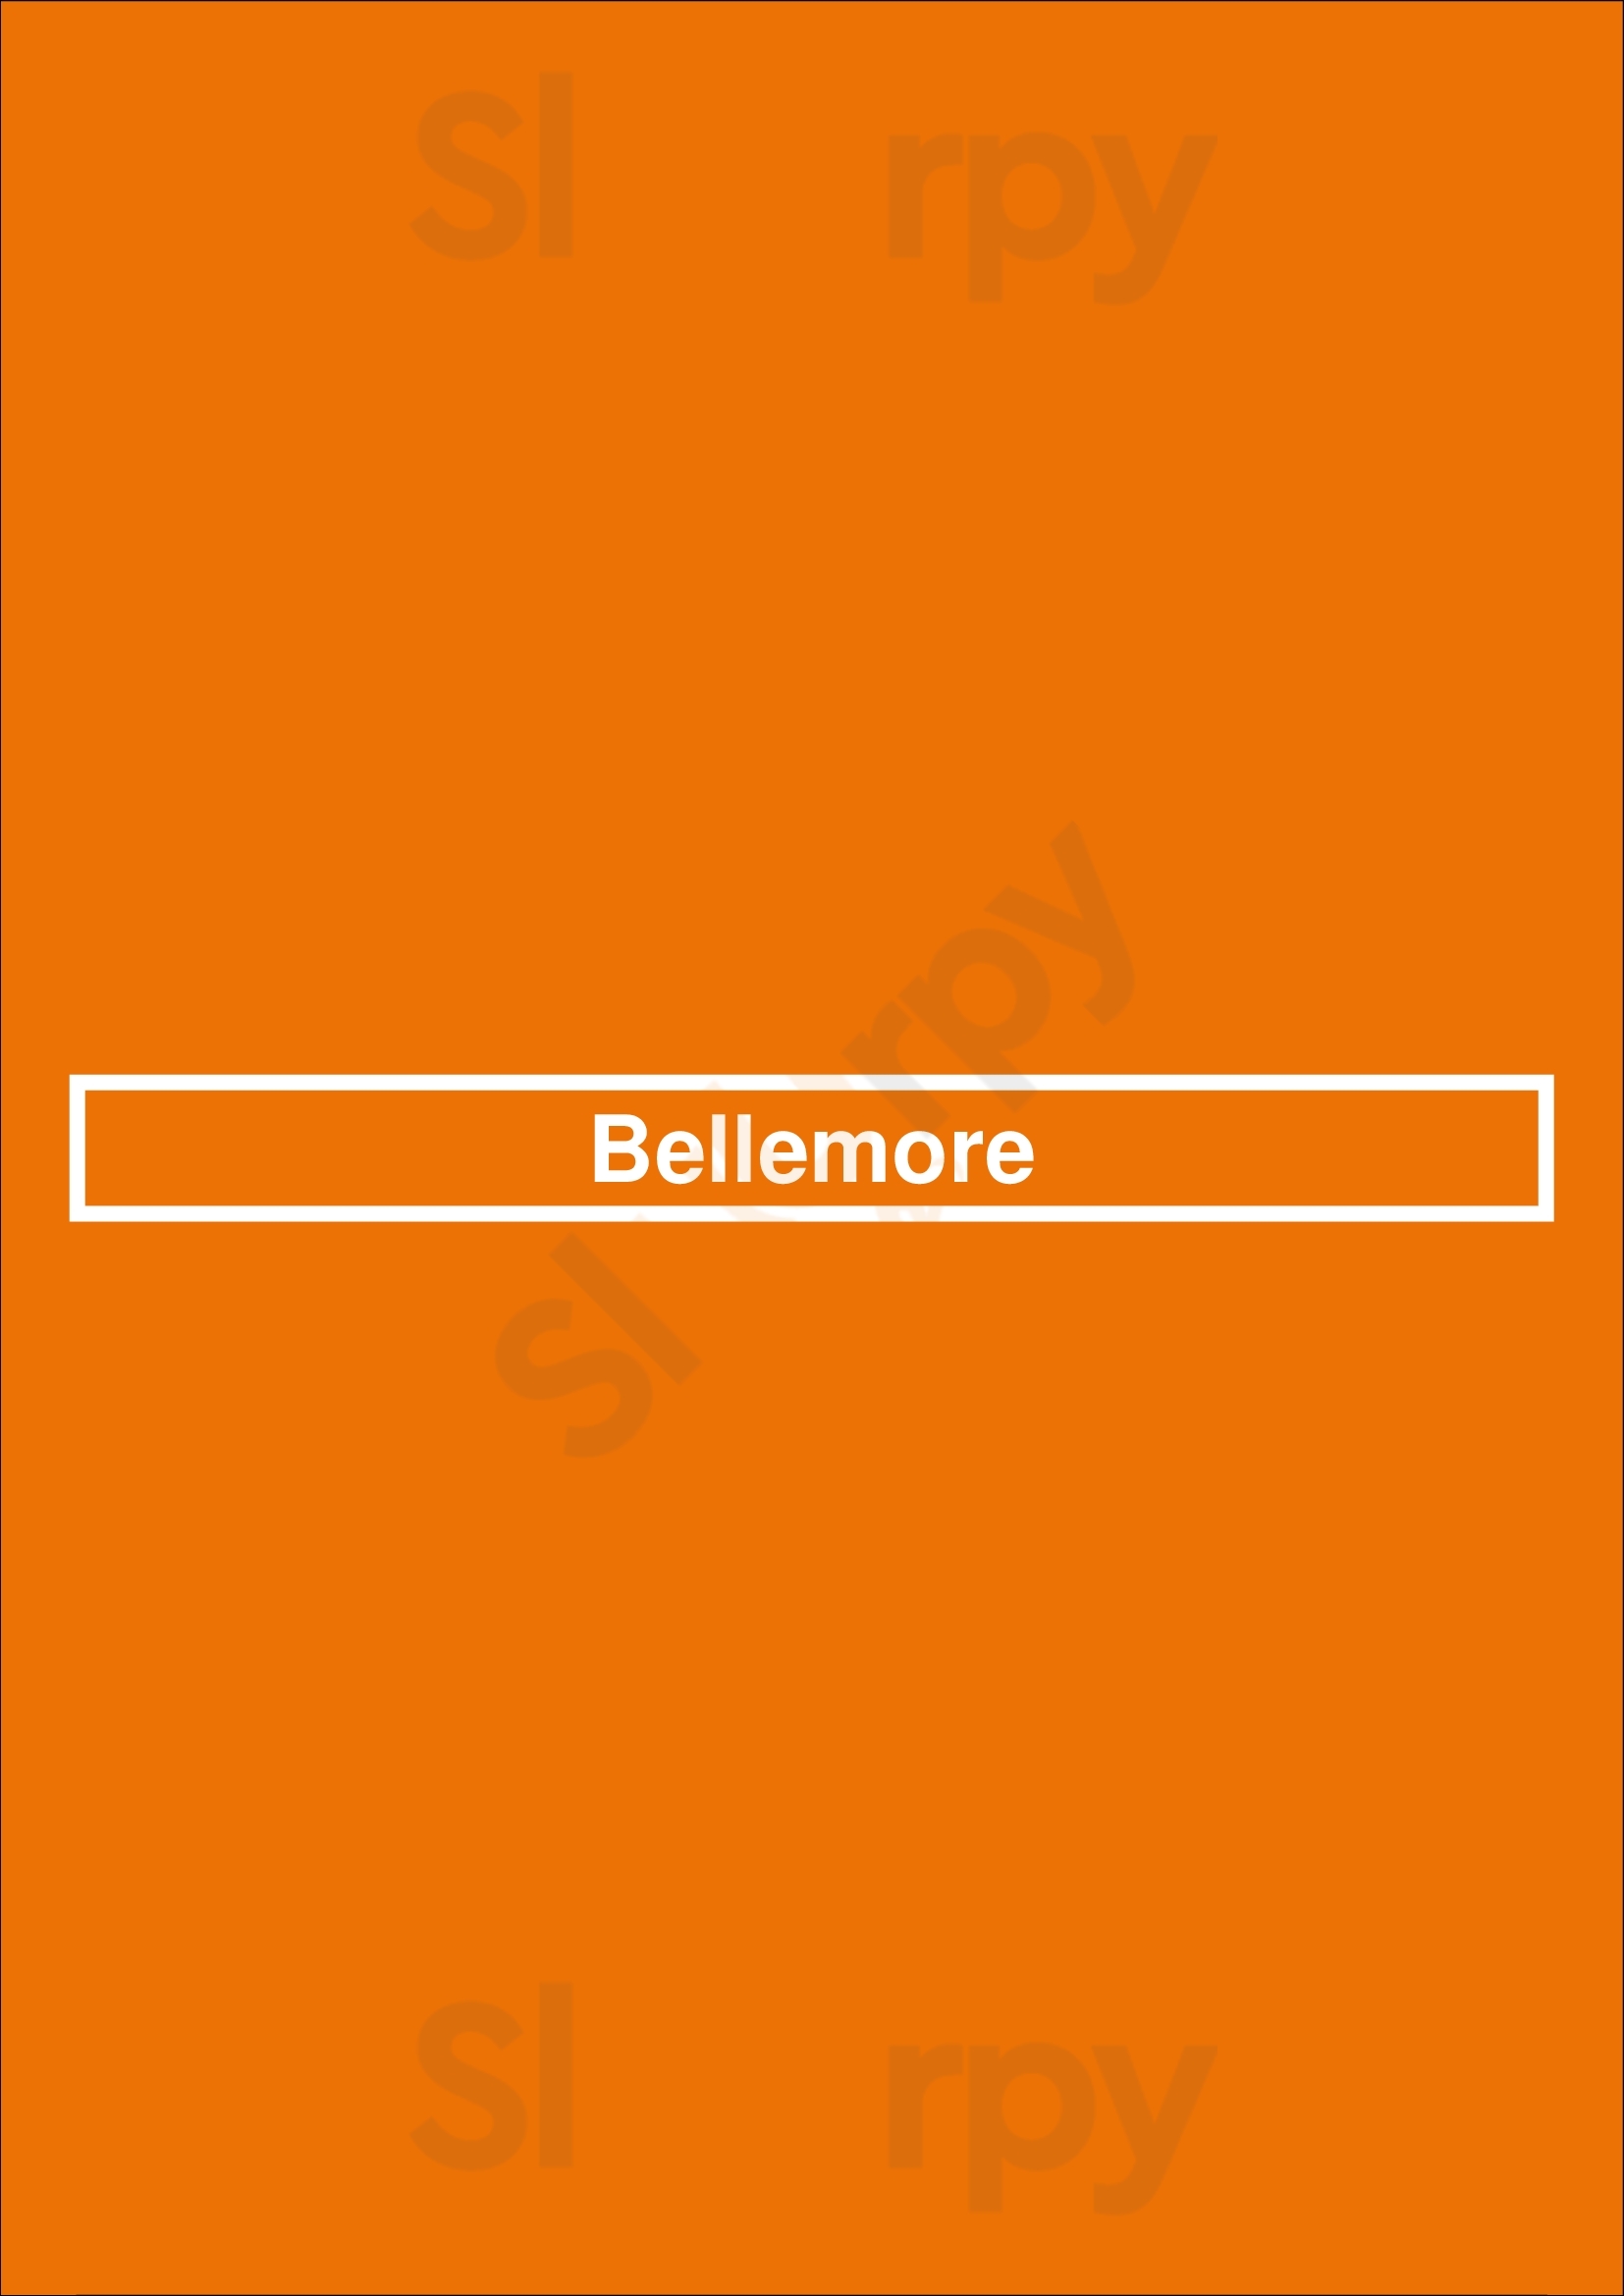 Bellemore Chicago Menu - 1